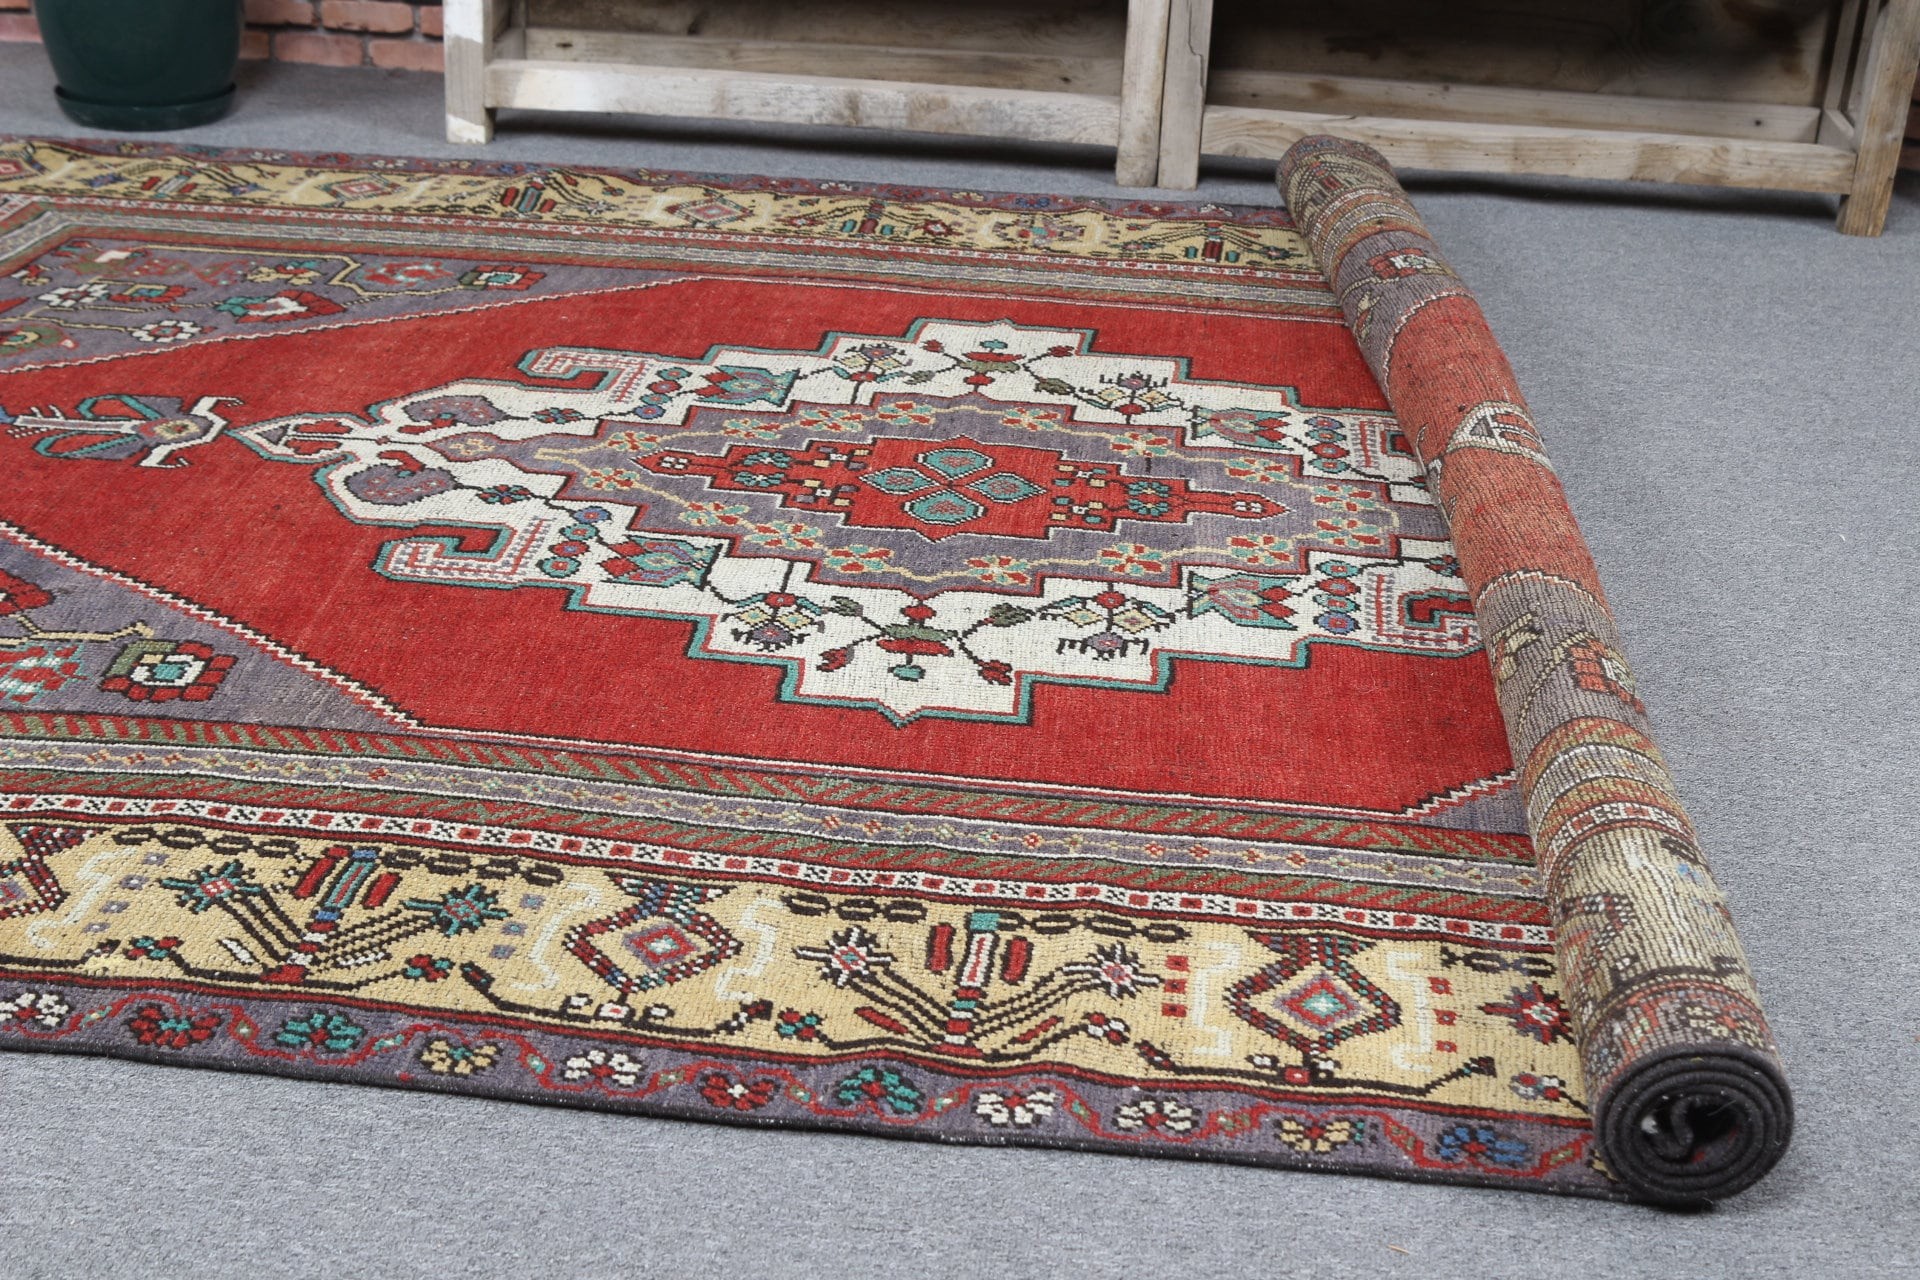 Red Moroccan Rug, Oushak Rug, Vintage Rug, Turkish Rug, Living Room Rug, Home Decor Rugs, Handwoven Rug, 5.8x9.4 ft Large Rug, Bedroom Rug